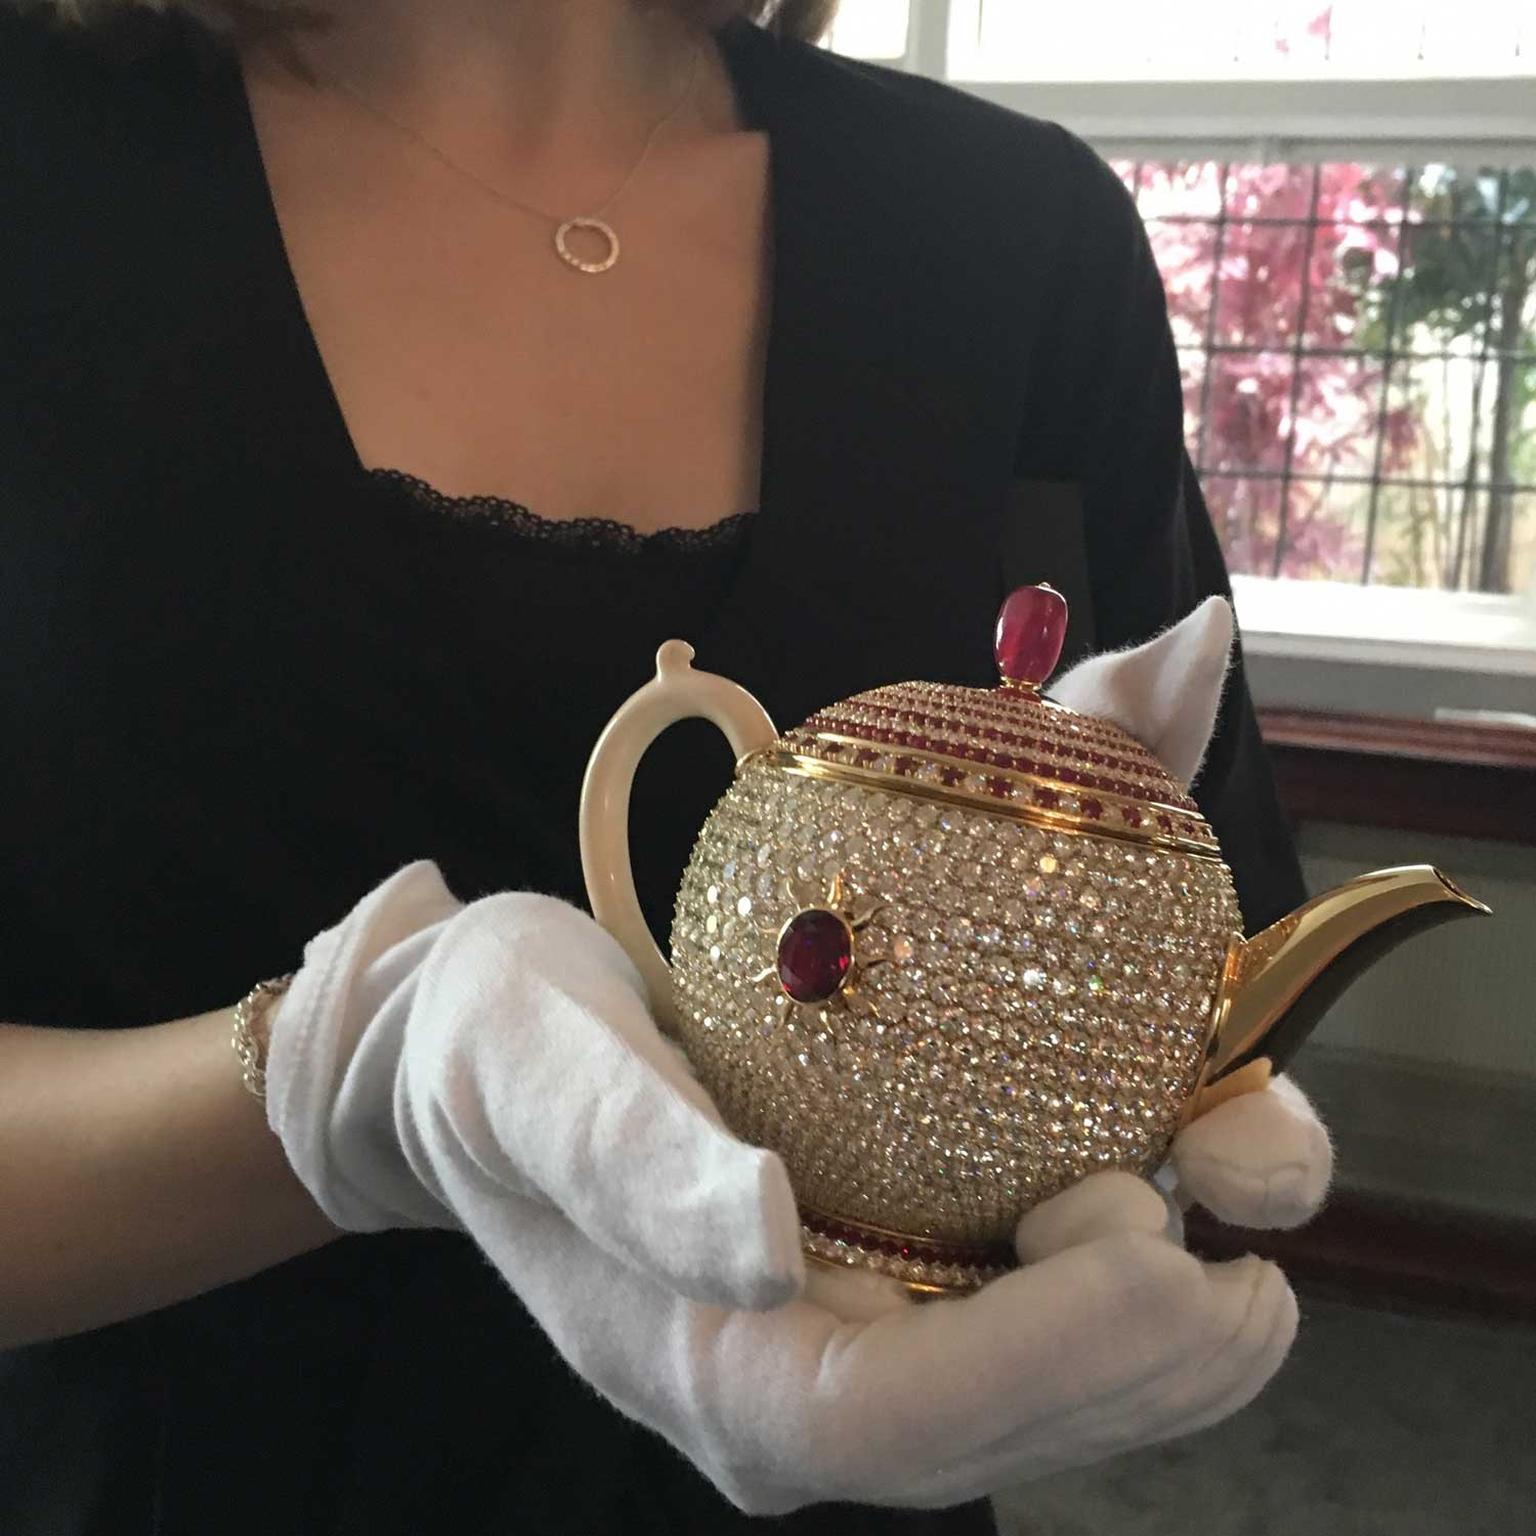 The Egoist teapot has been valued at $3 million dollars